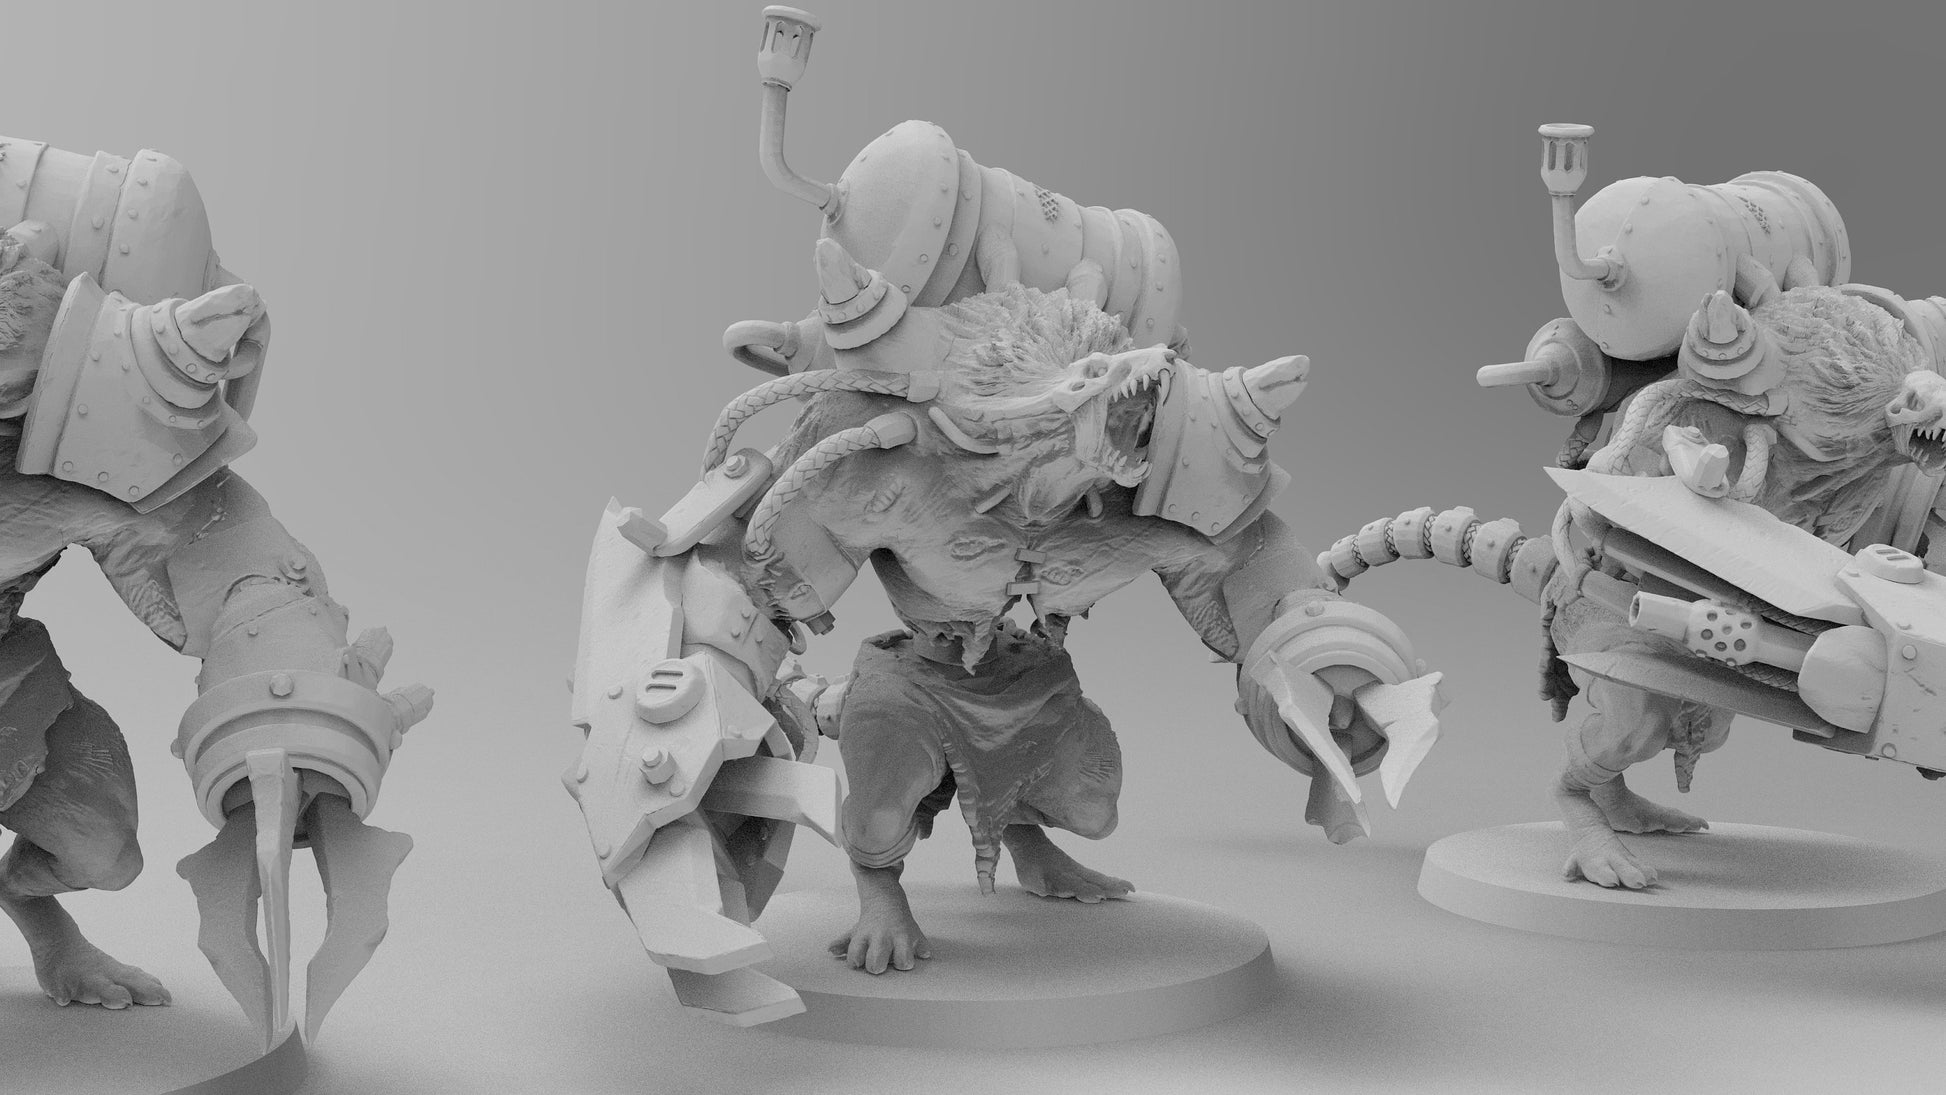 Chaotic Ratmen Ogre Abomination | Ratmen | Resin 3D Printed Miniature | Warhammer Proxy | RPG | D&D | DnD| EmanG |